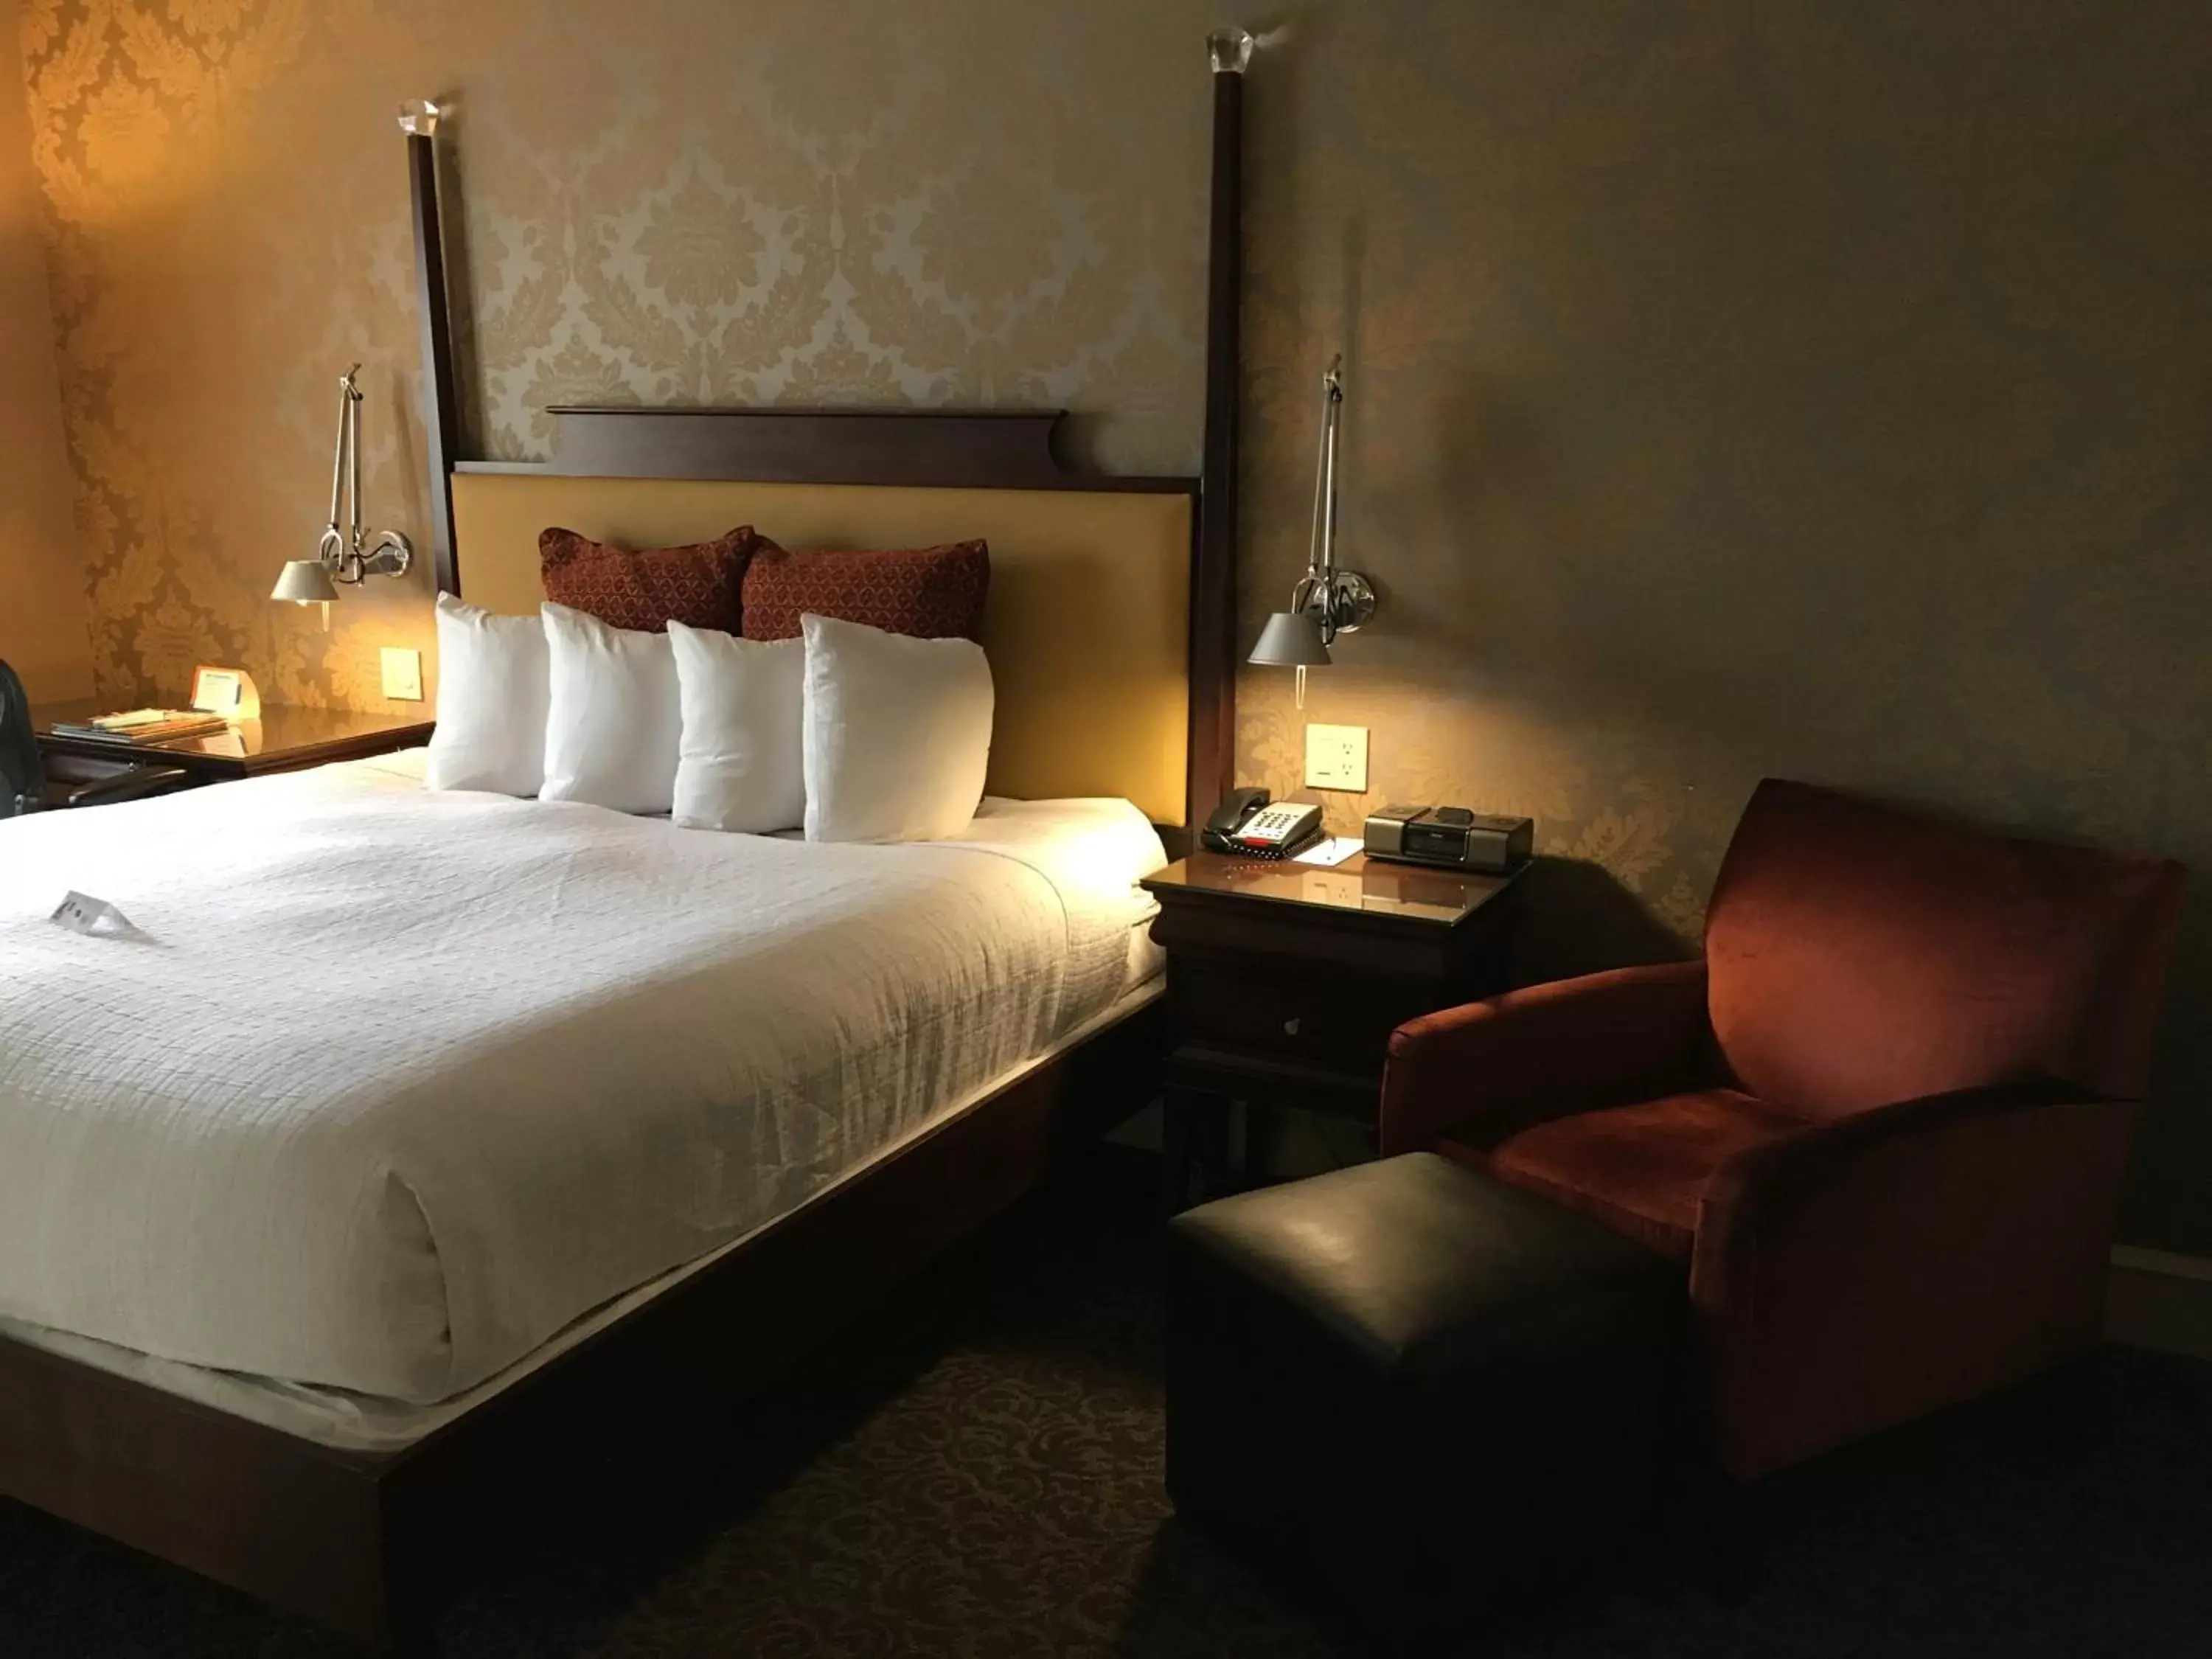 Queen Room in Chestnut Hill Hotel